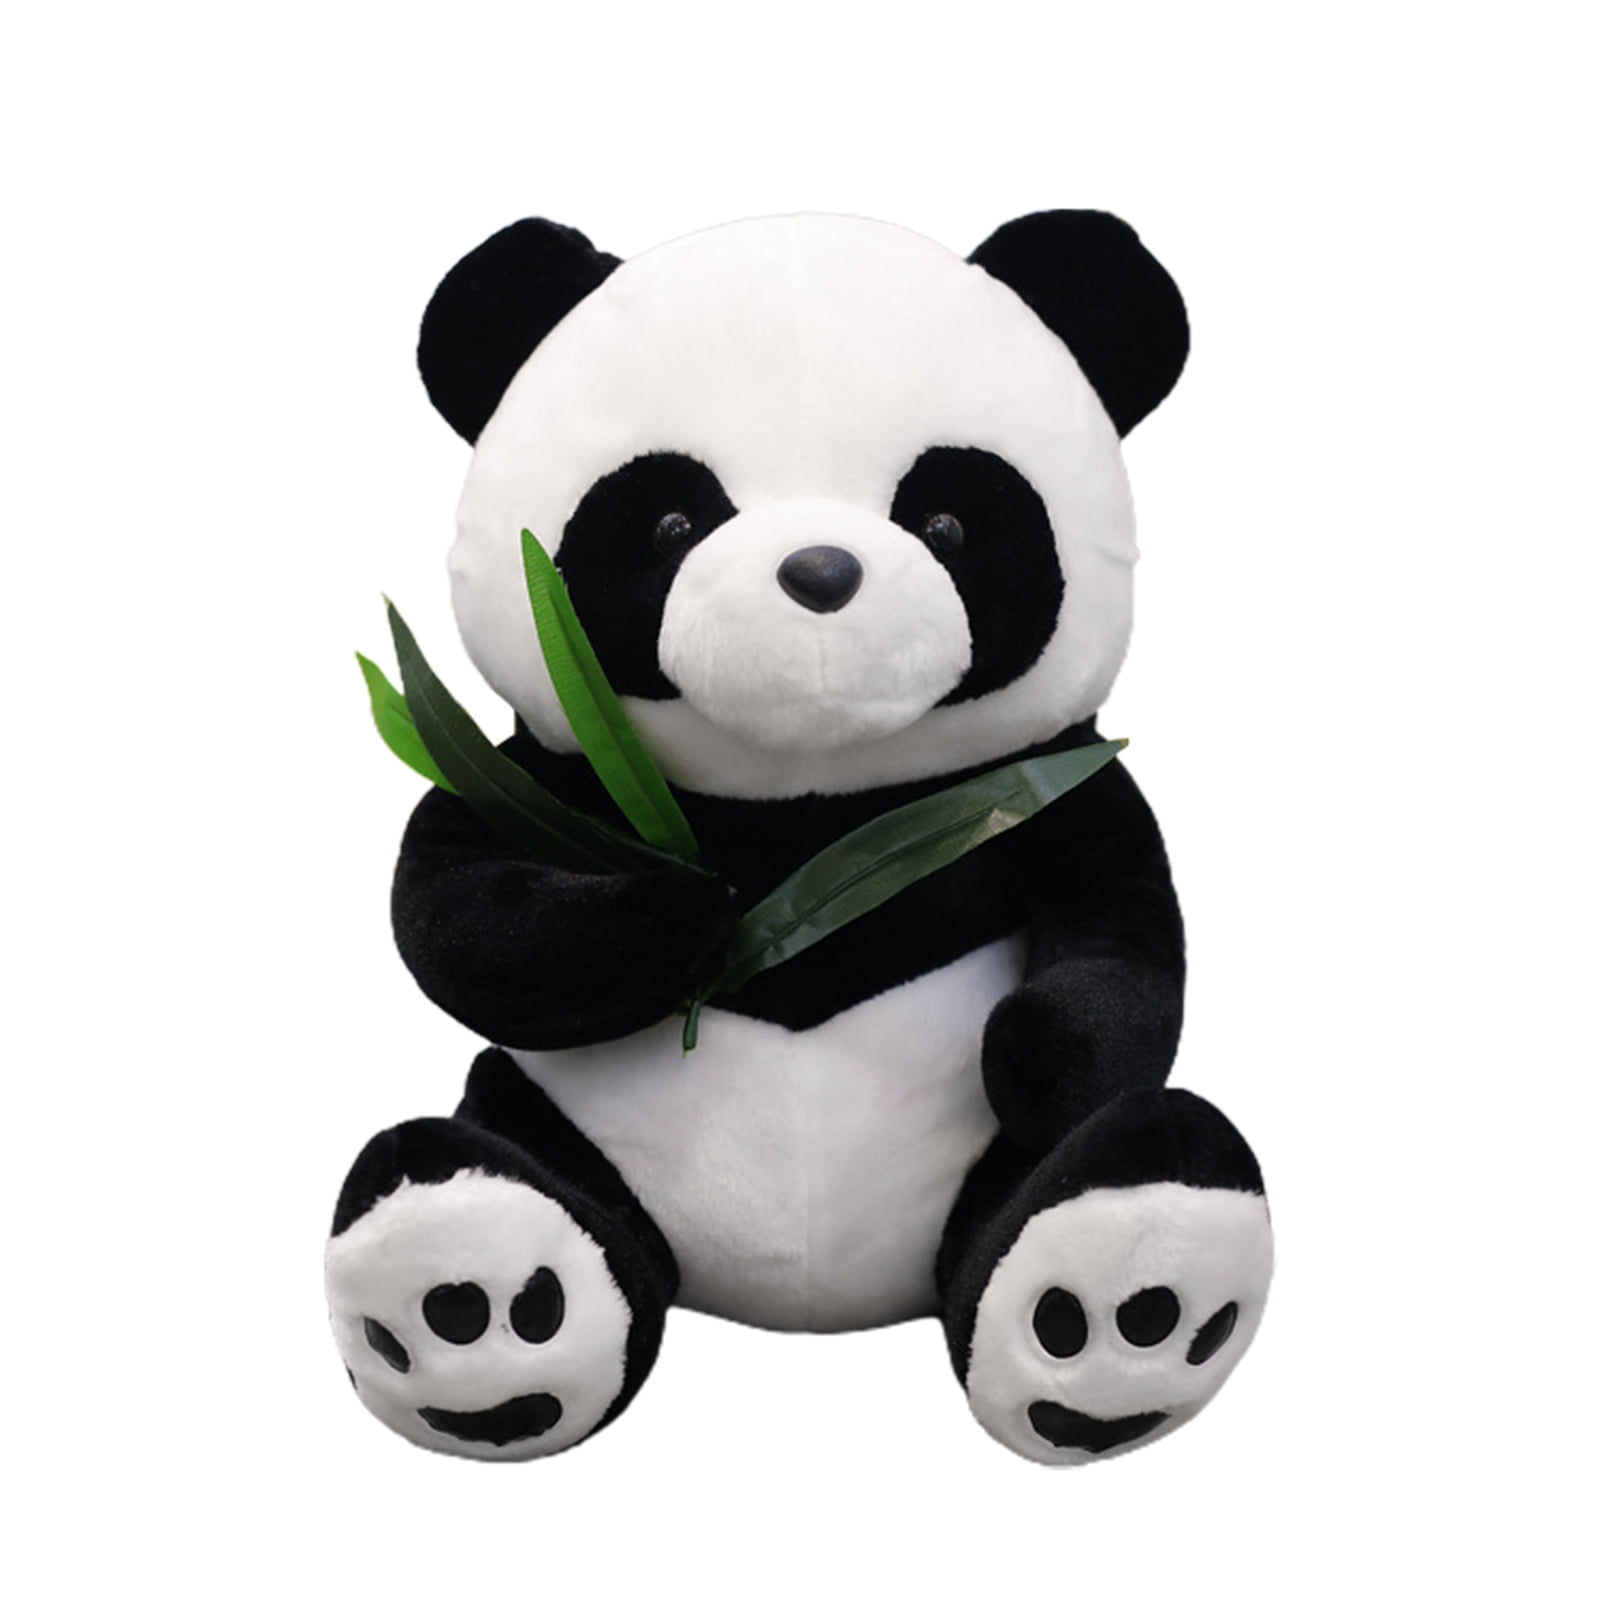 NEW 27 INCH PLUSH TEDDY BEAR CUTE PANDA SOFT TOY HOLD PILLOW BIRTHDAY GIFT 